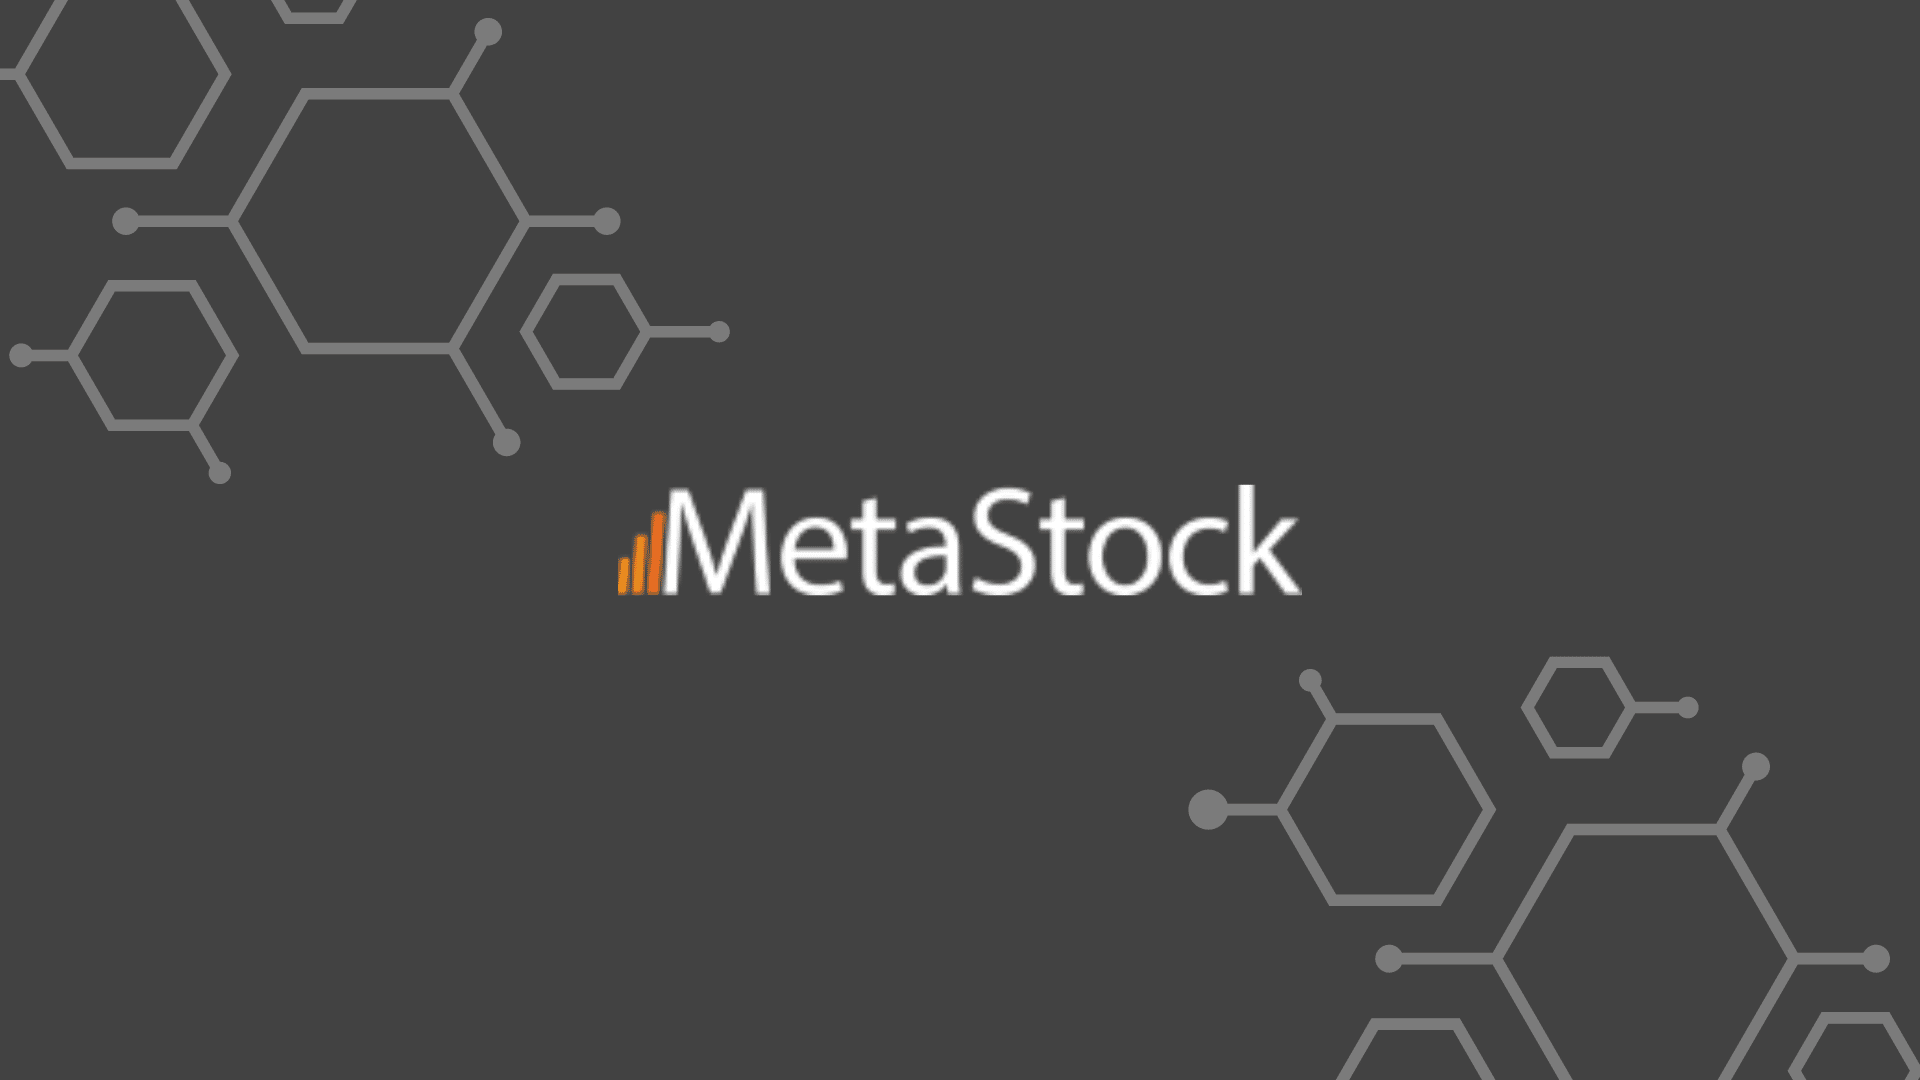 MetaStock Logo